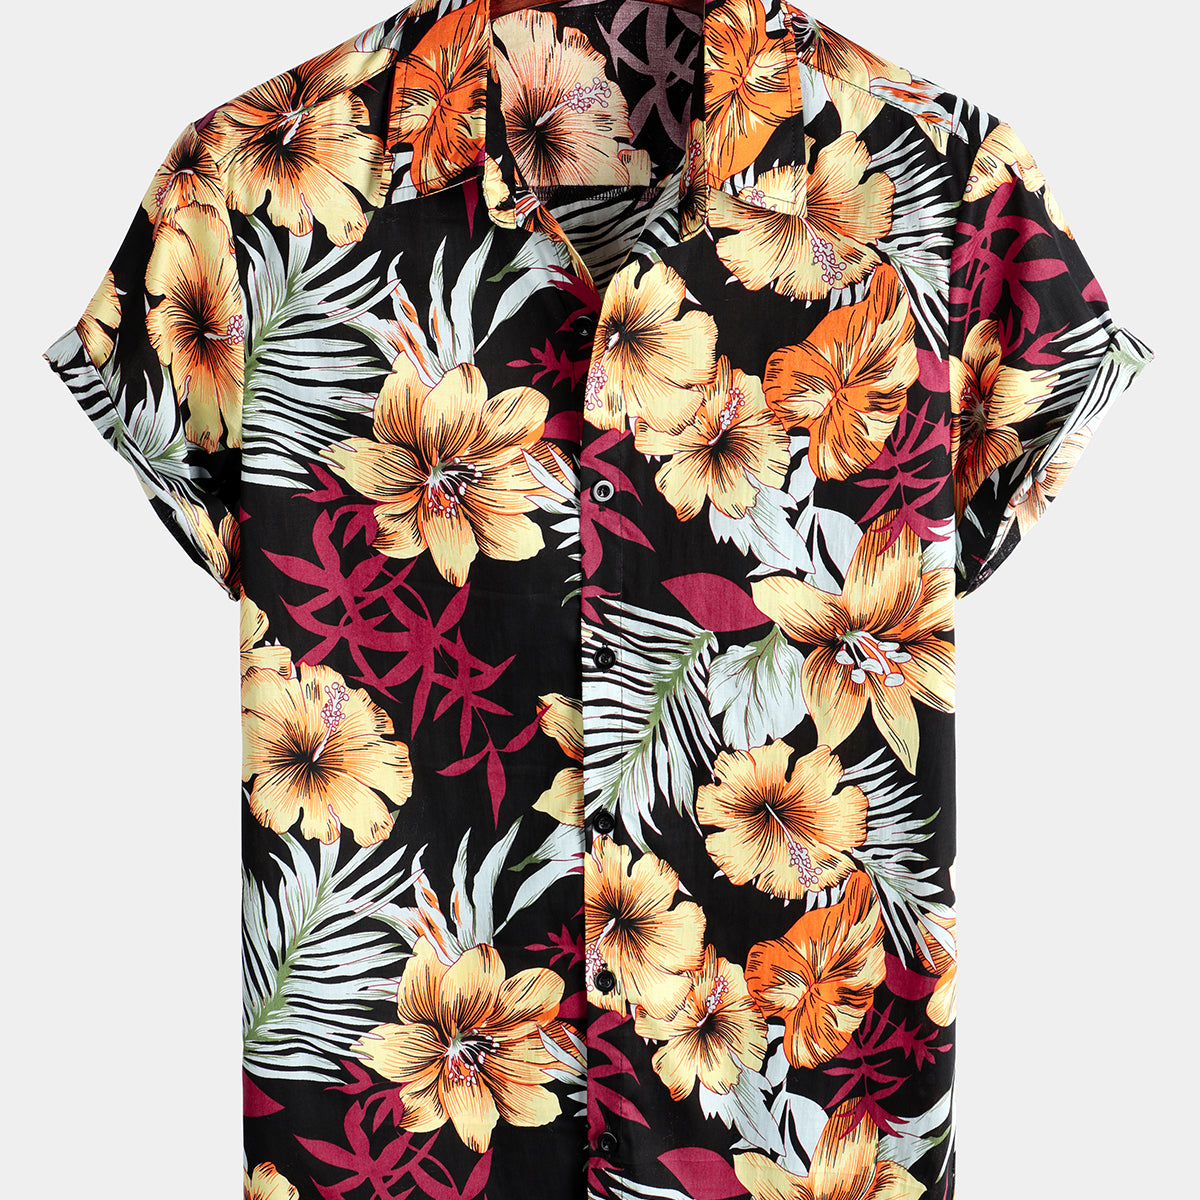 Men's Hawaii Tropical Plant Print Floral Cotton Shirt